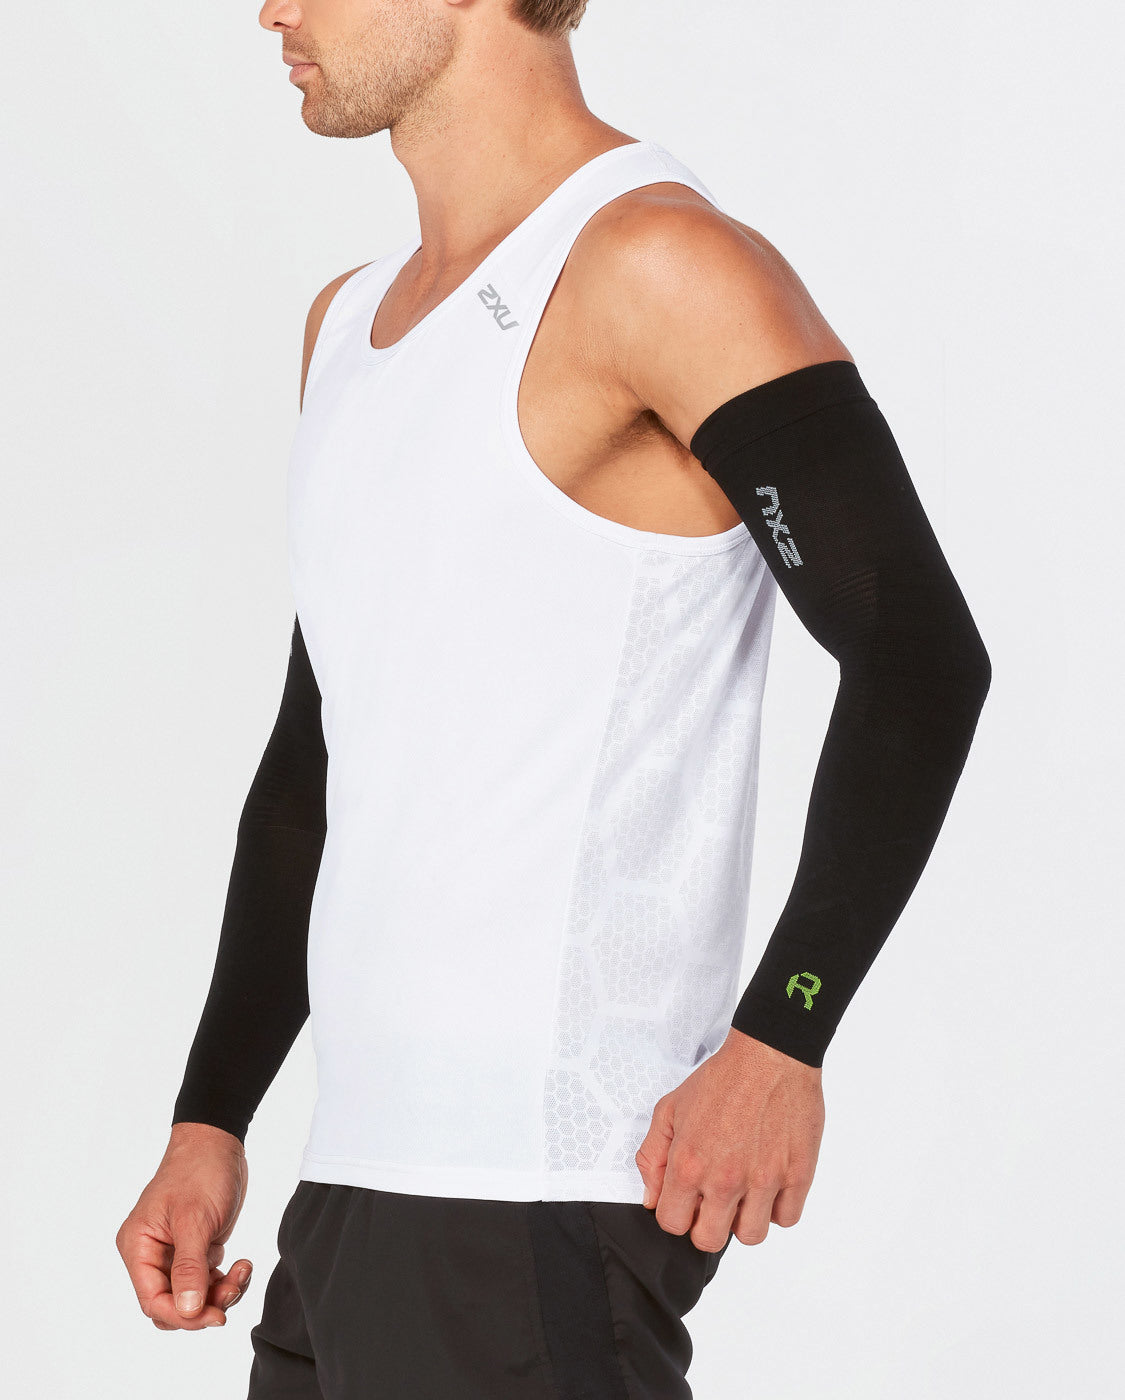 Recovery Flex Arm Sleeves, Black/Nero